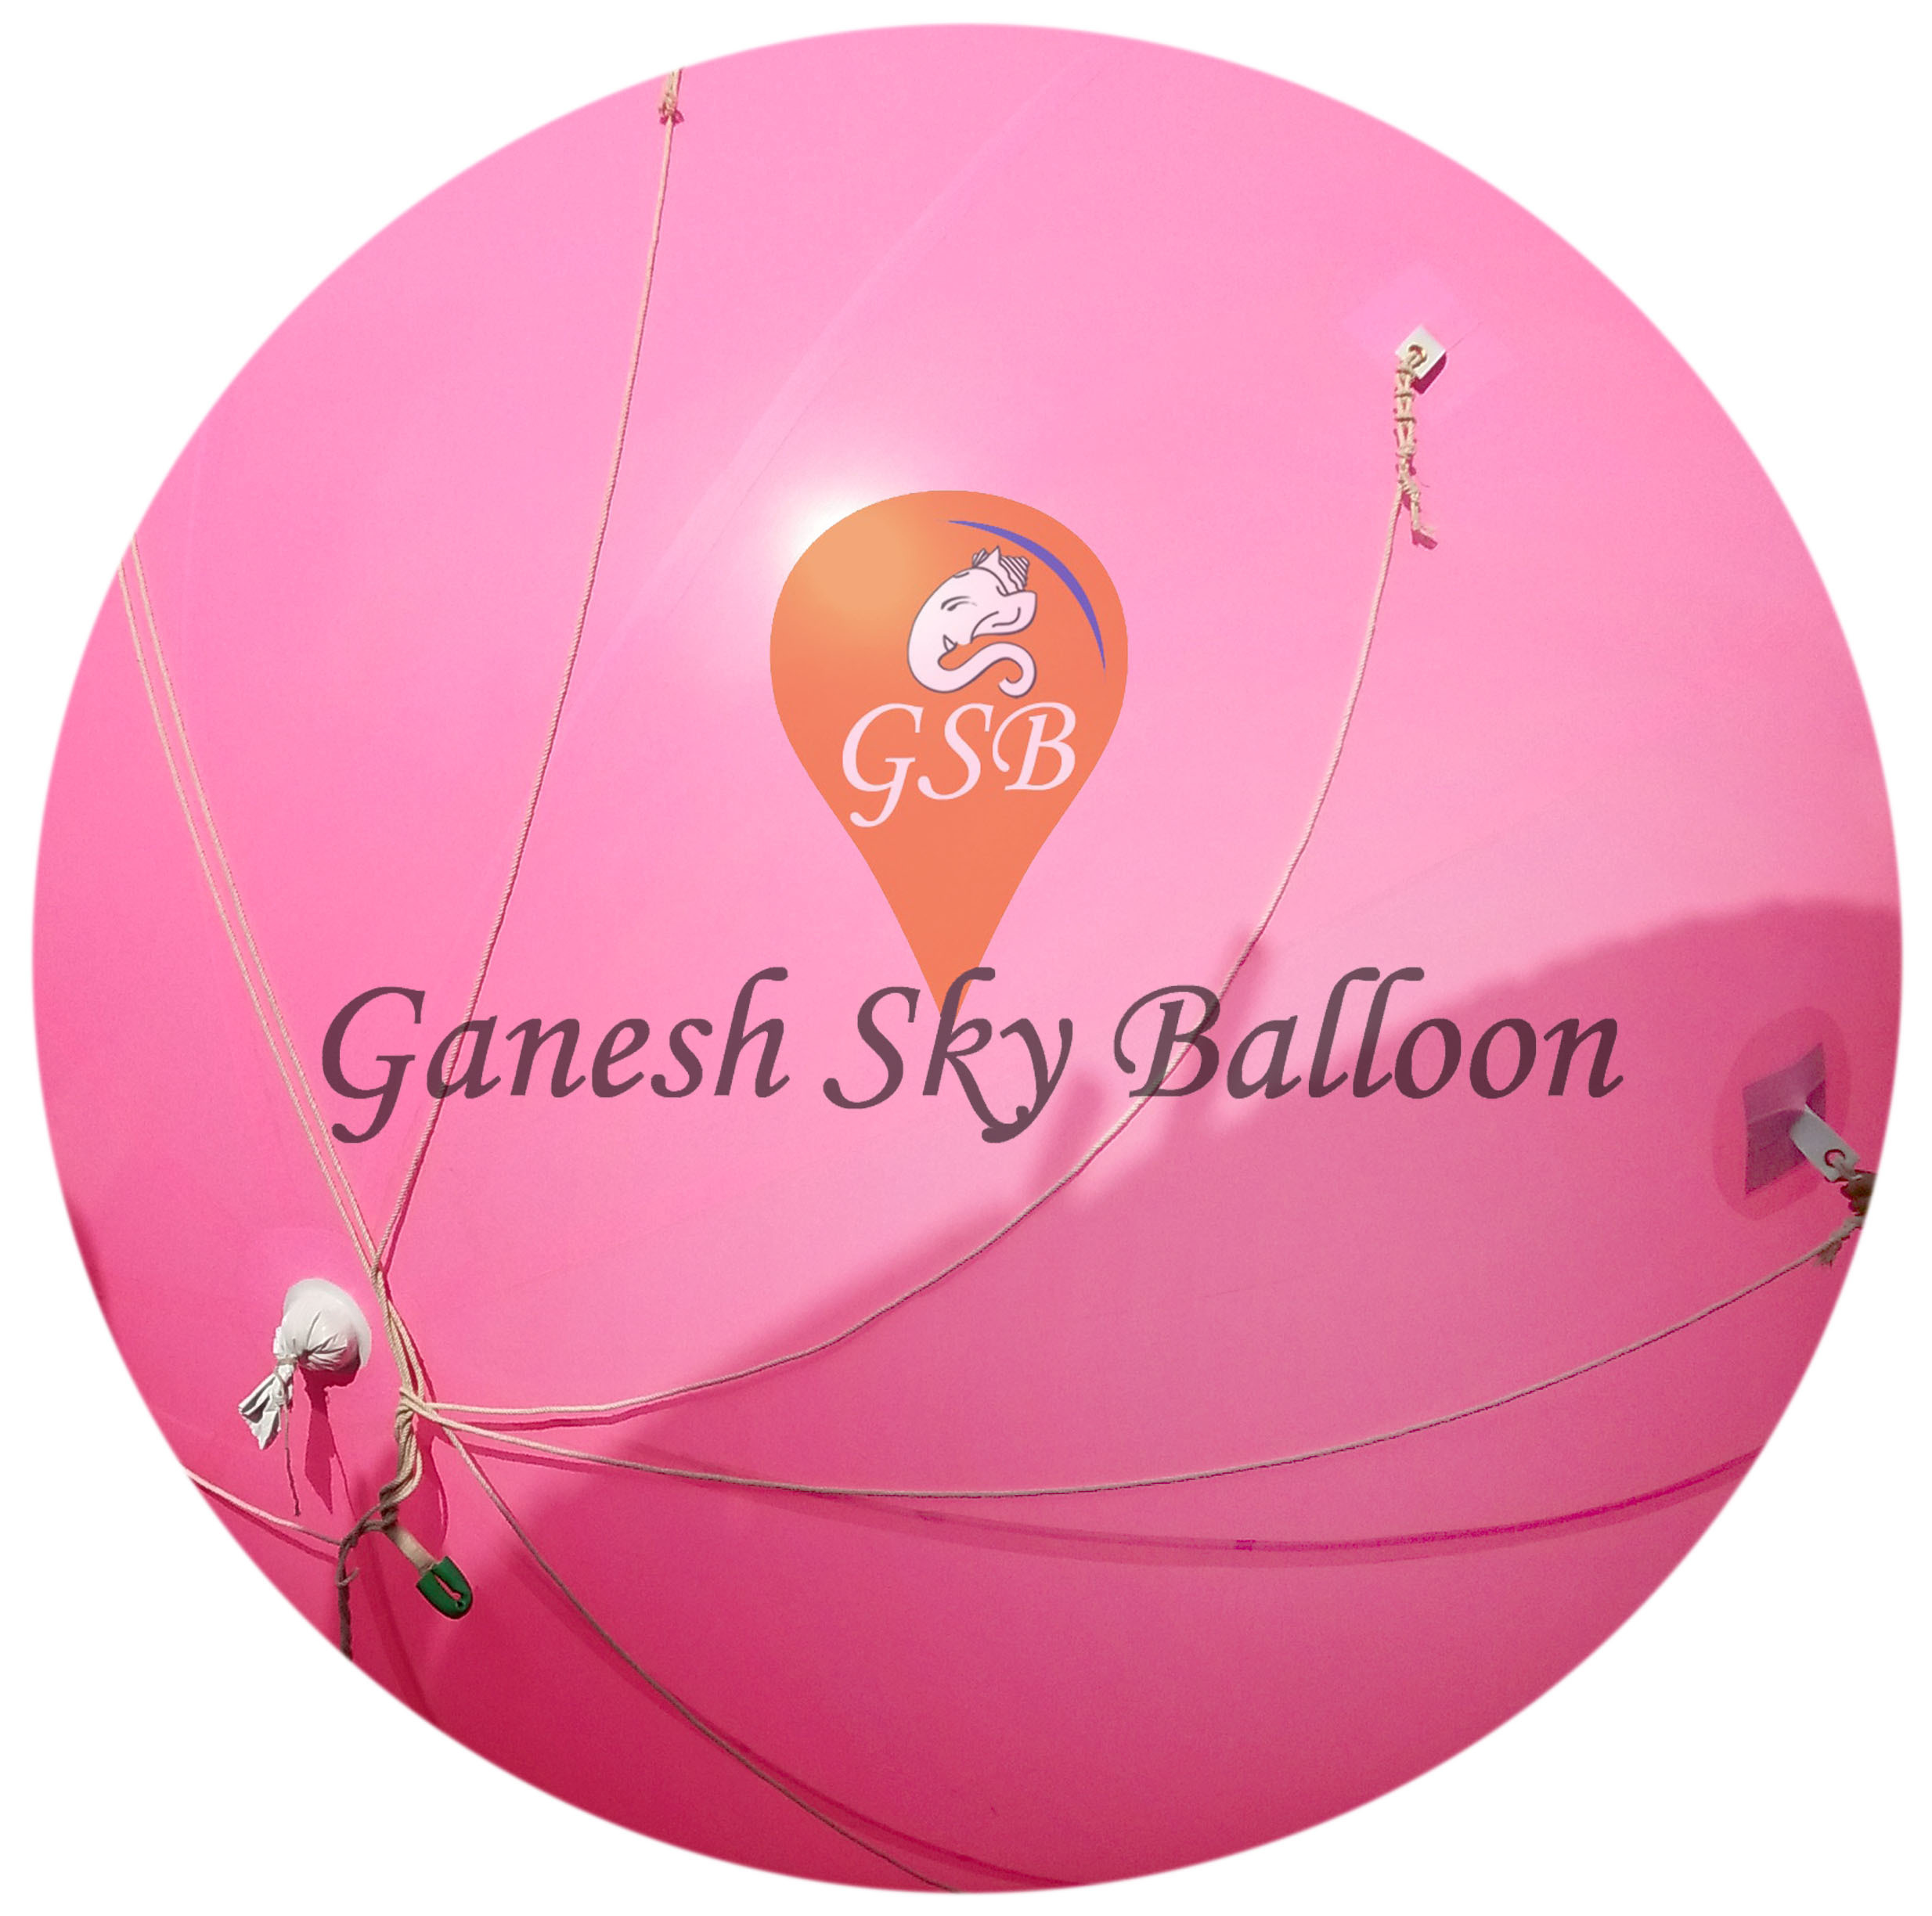 BJP Promotional Balloon